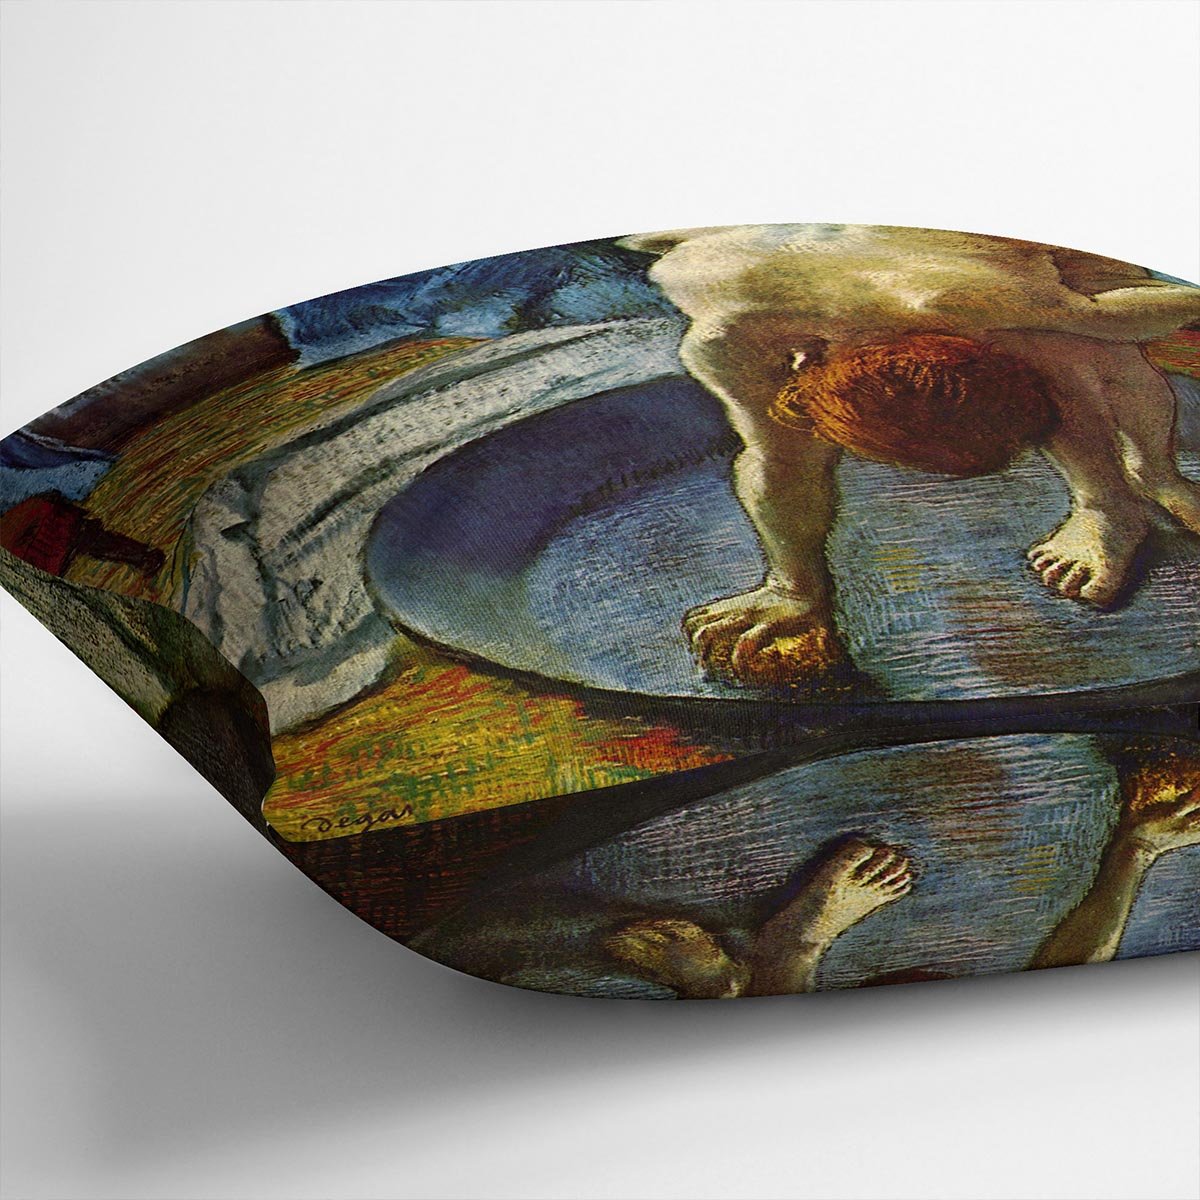 The Tub by Degas Cushion